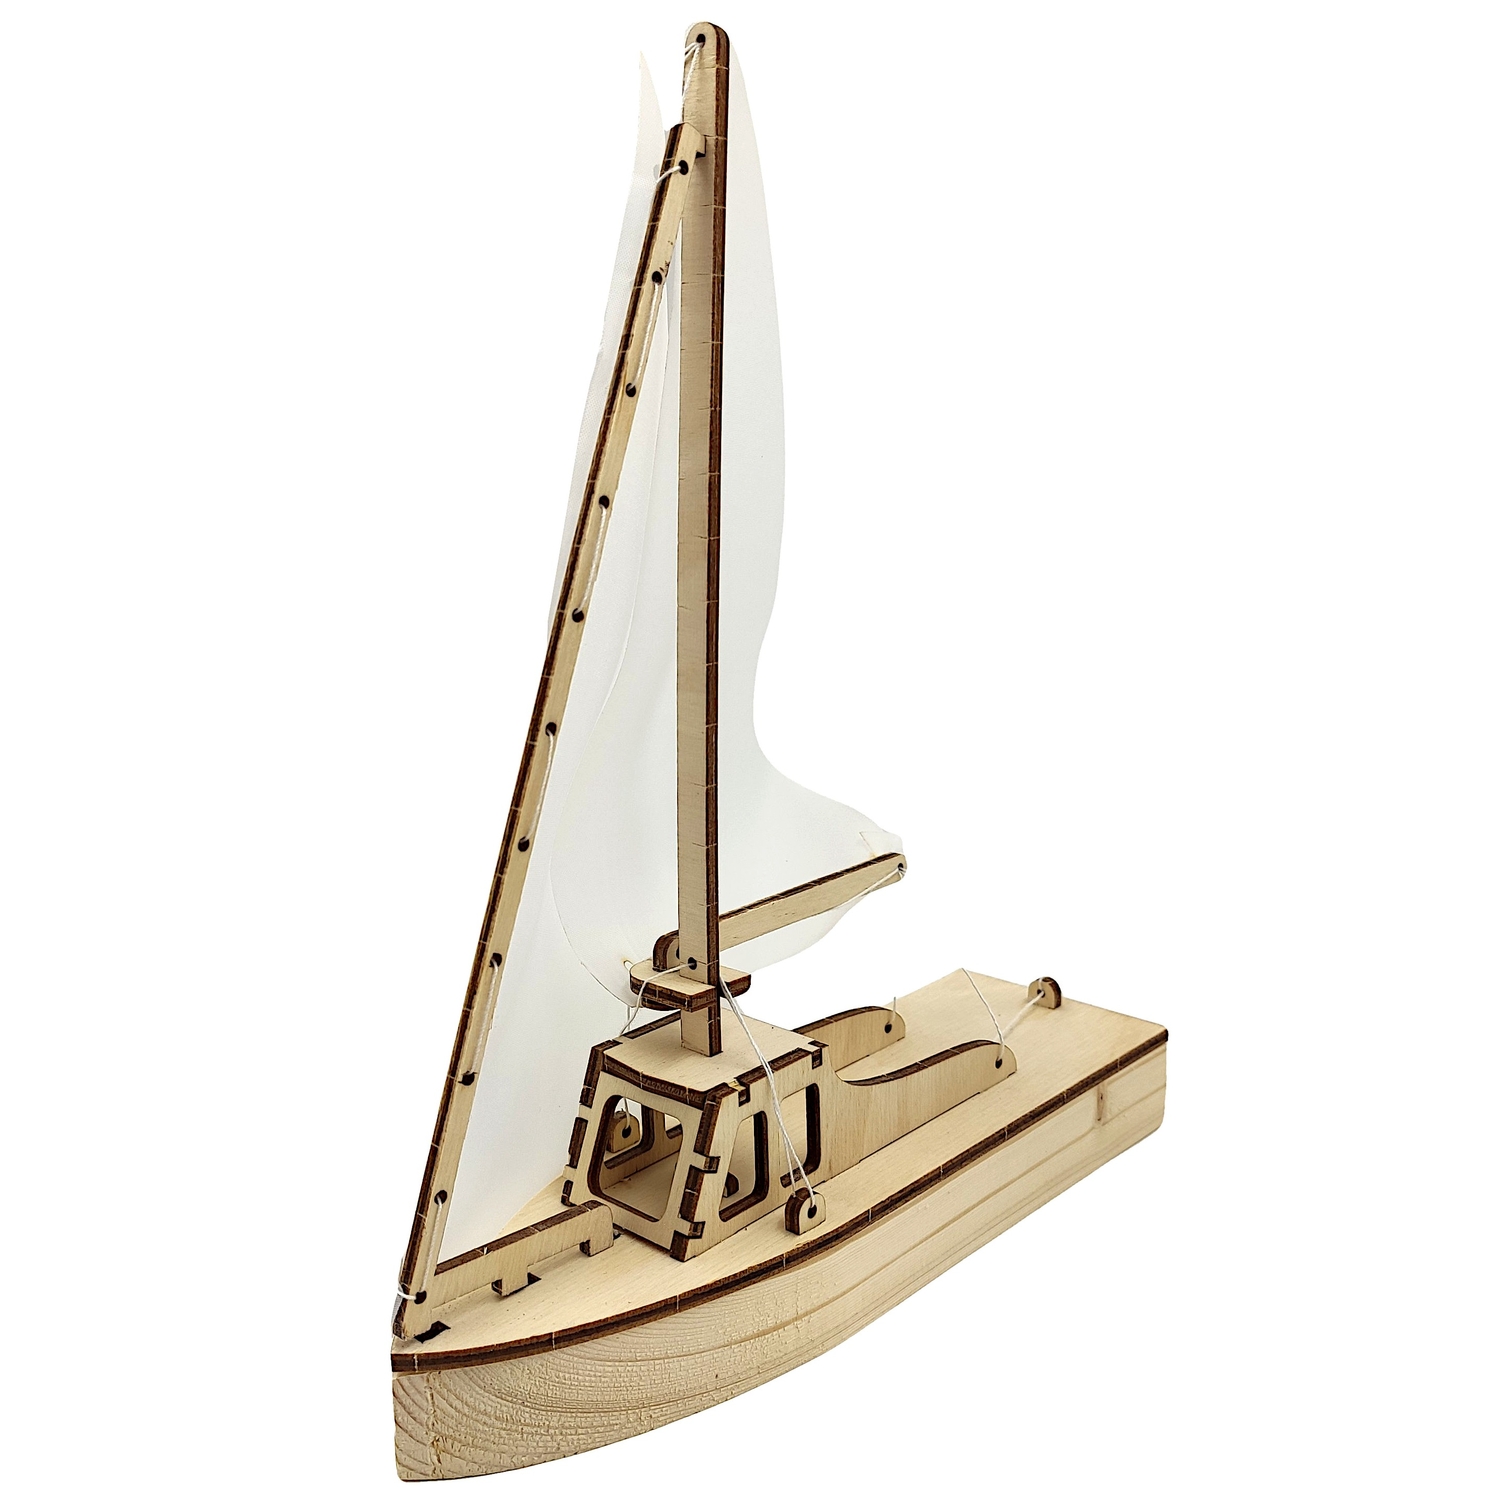 Конструктор-набор для сборки Древо Игр Парусная яхта DI-K003 - фото 4